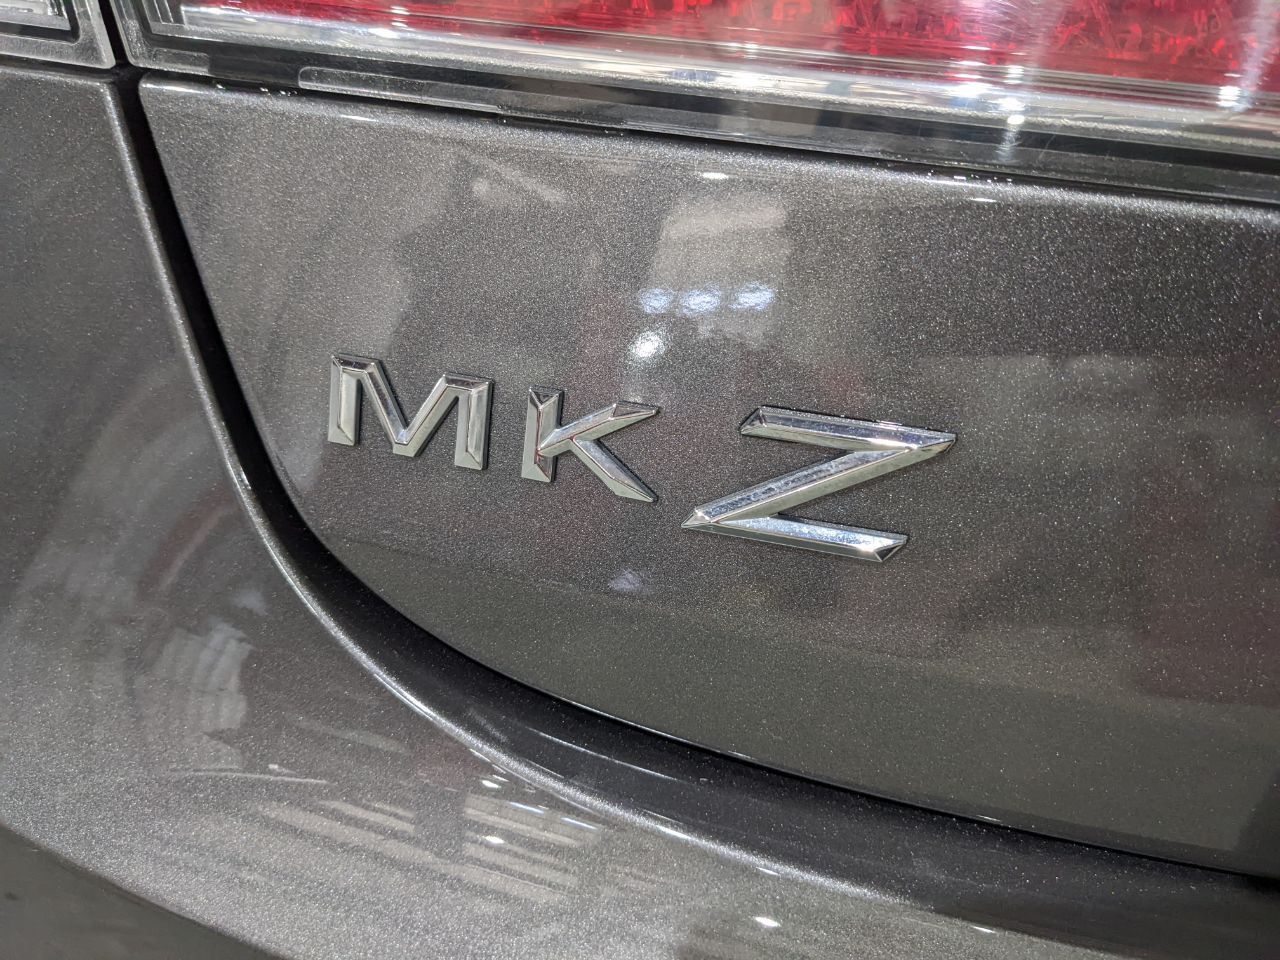 2014 Lincoln MKZ